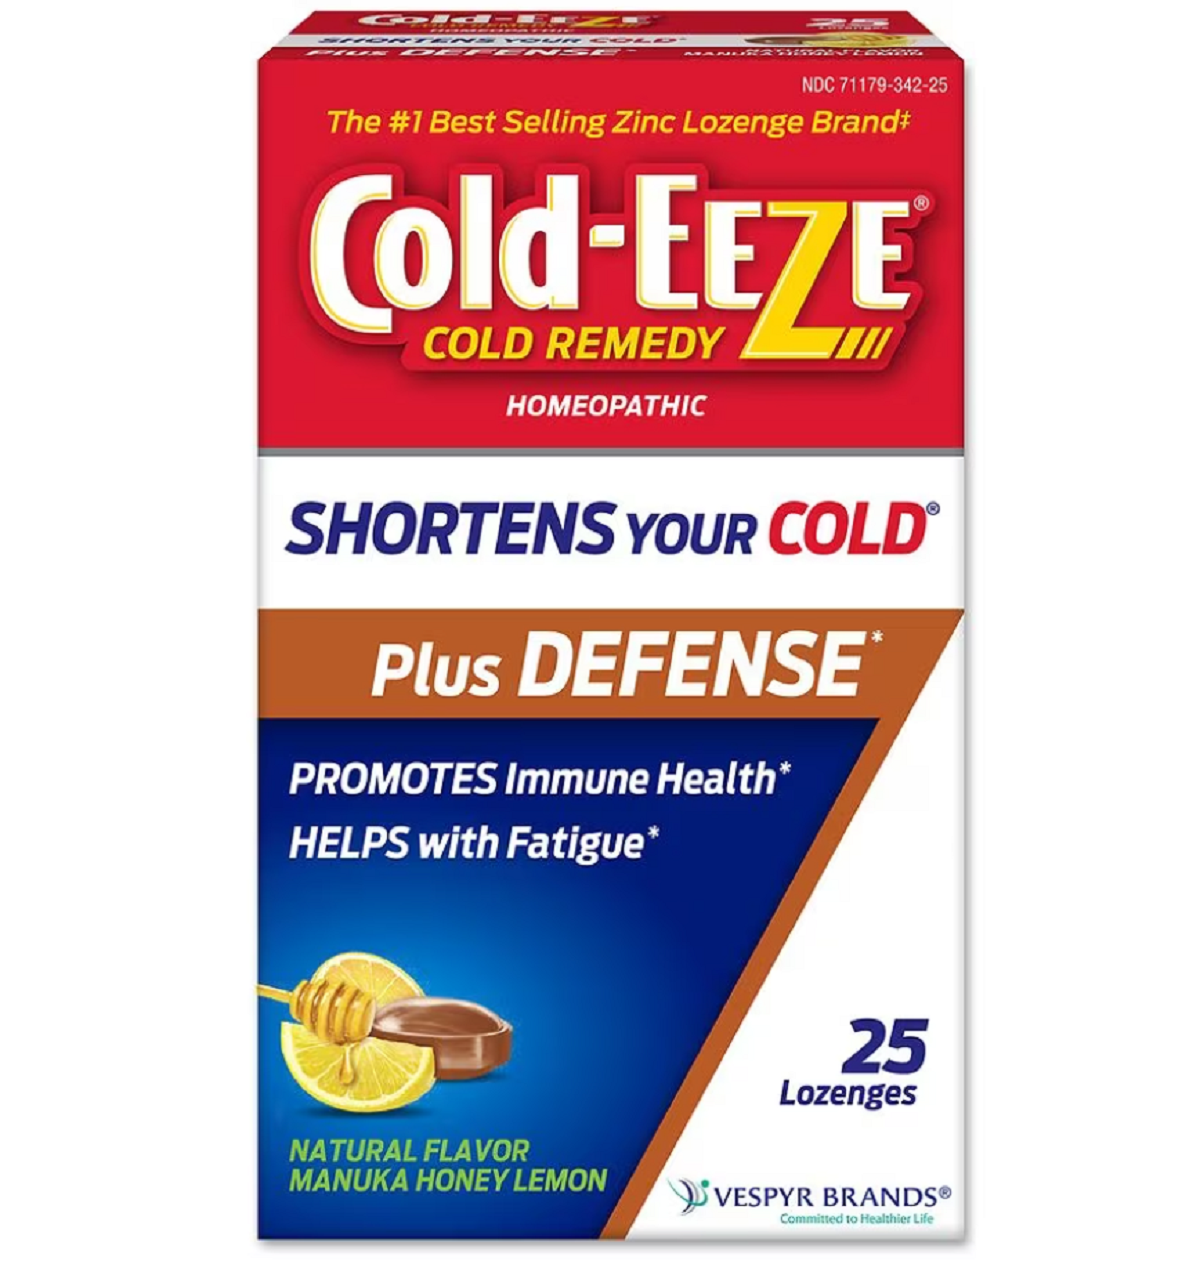 Cold-Eeze Zinc Lozenges, Cold-EEZE Cold Remedy Printable Coupon